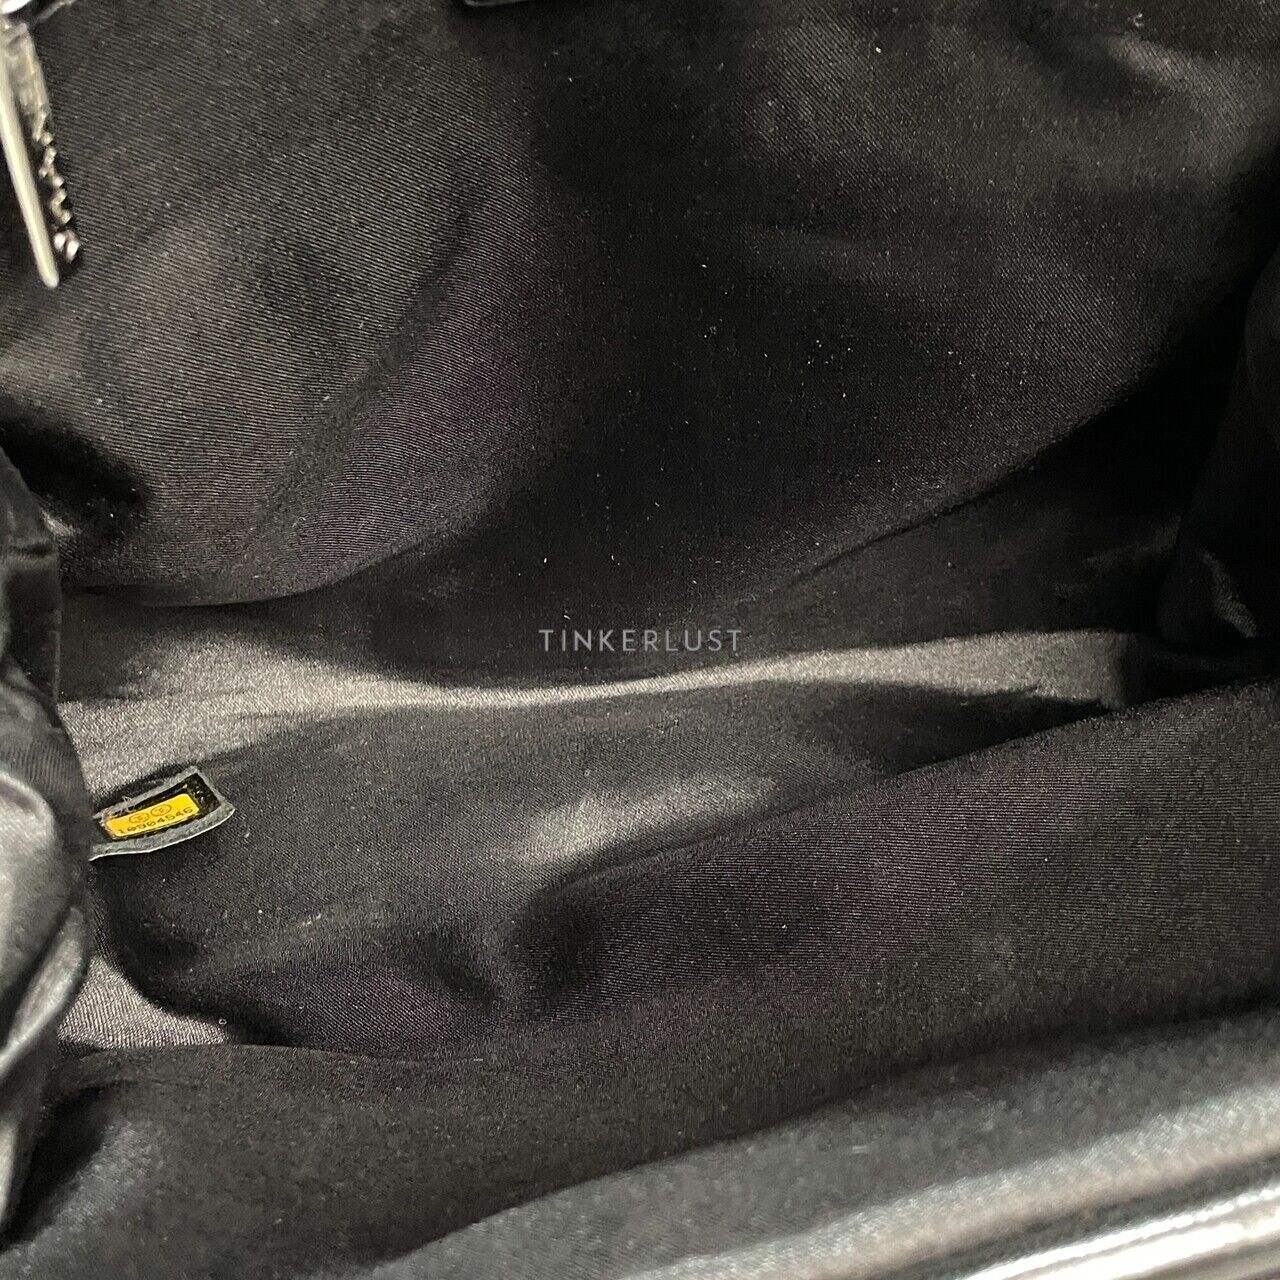 Chanel CC Tweed Chain #10 Shoulder Bag